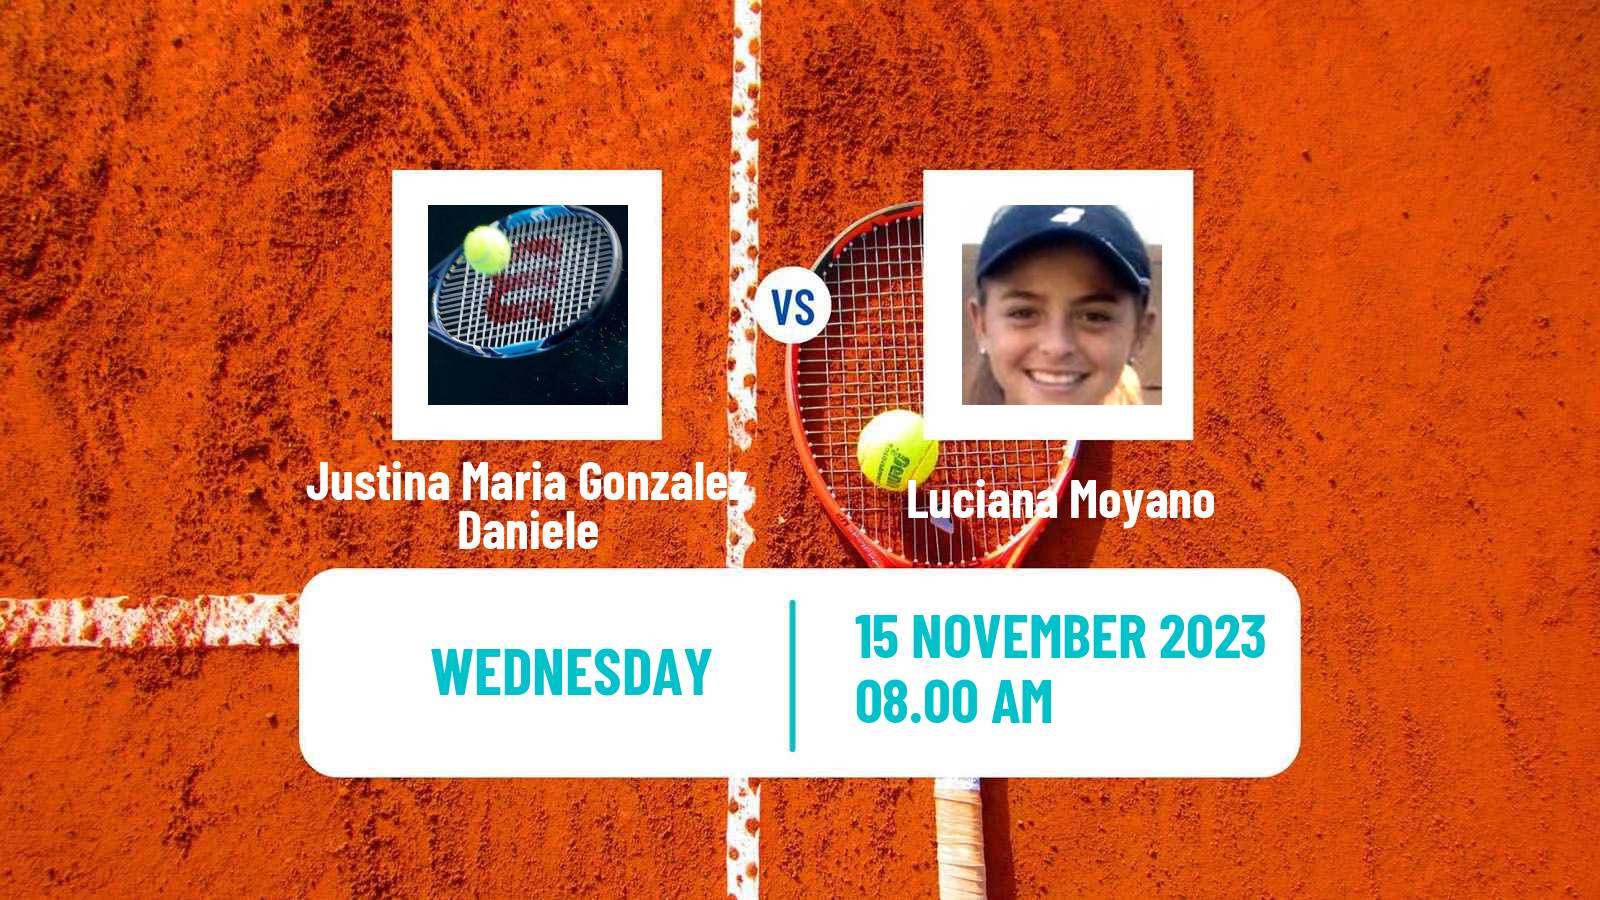 Tennis ITF W15 Buenos Aires 2 Women Justina Maria Gonzalez Daniele - Luciana Moyano